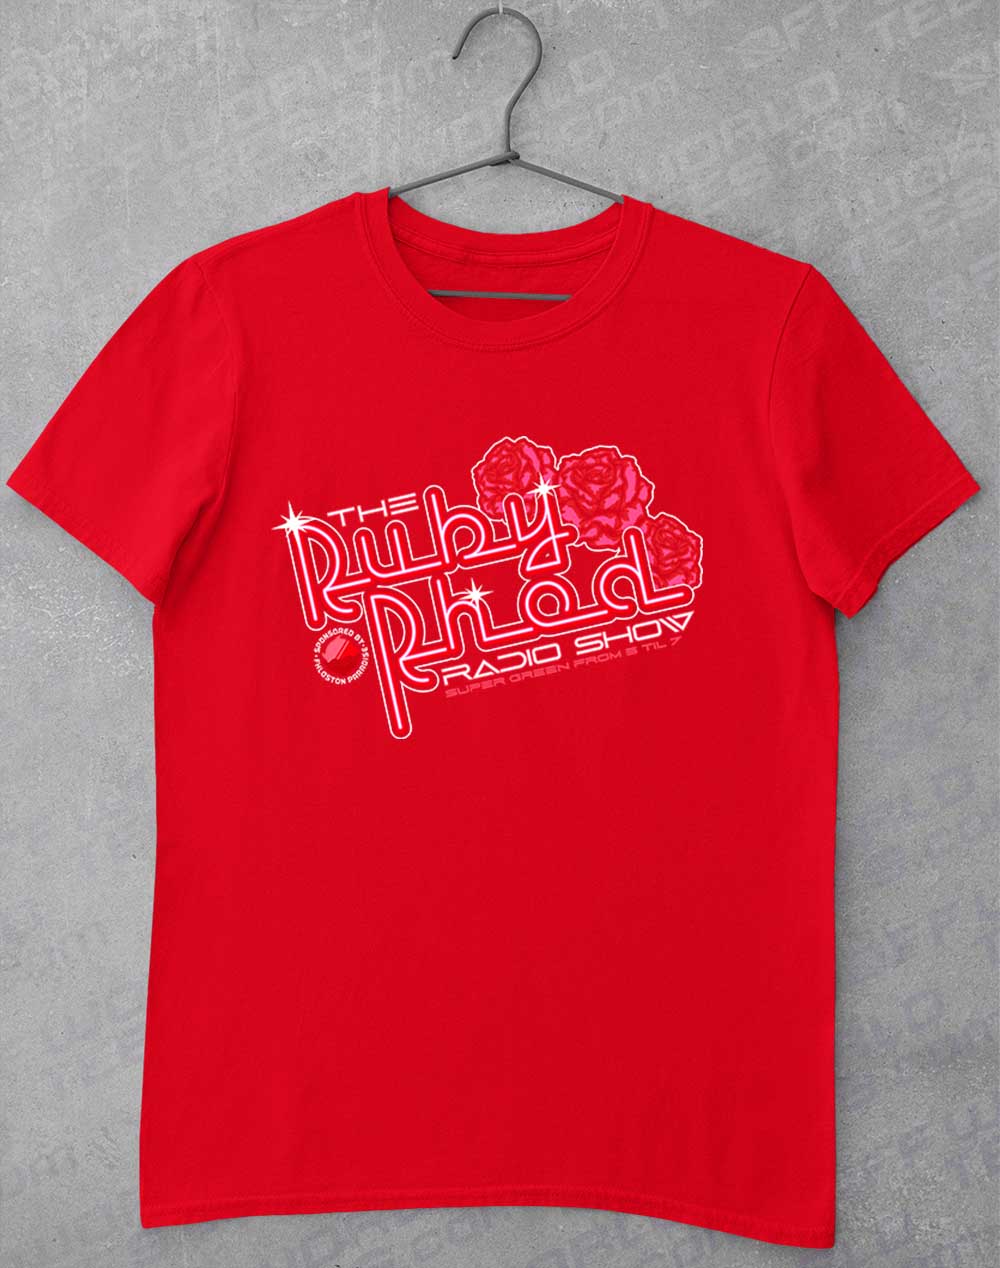 Red - Ruby Rhod Radio Show T-Shirt